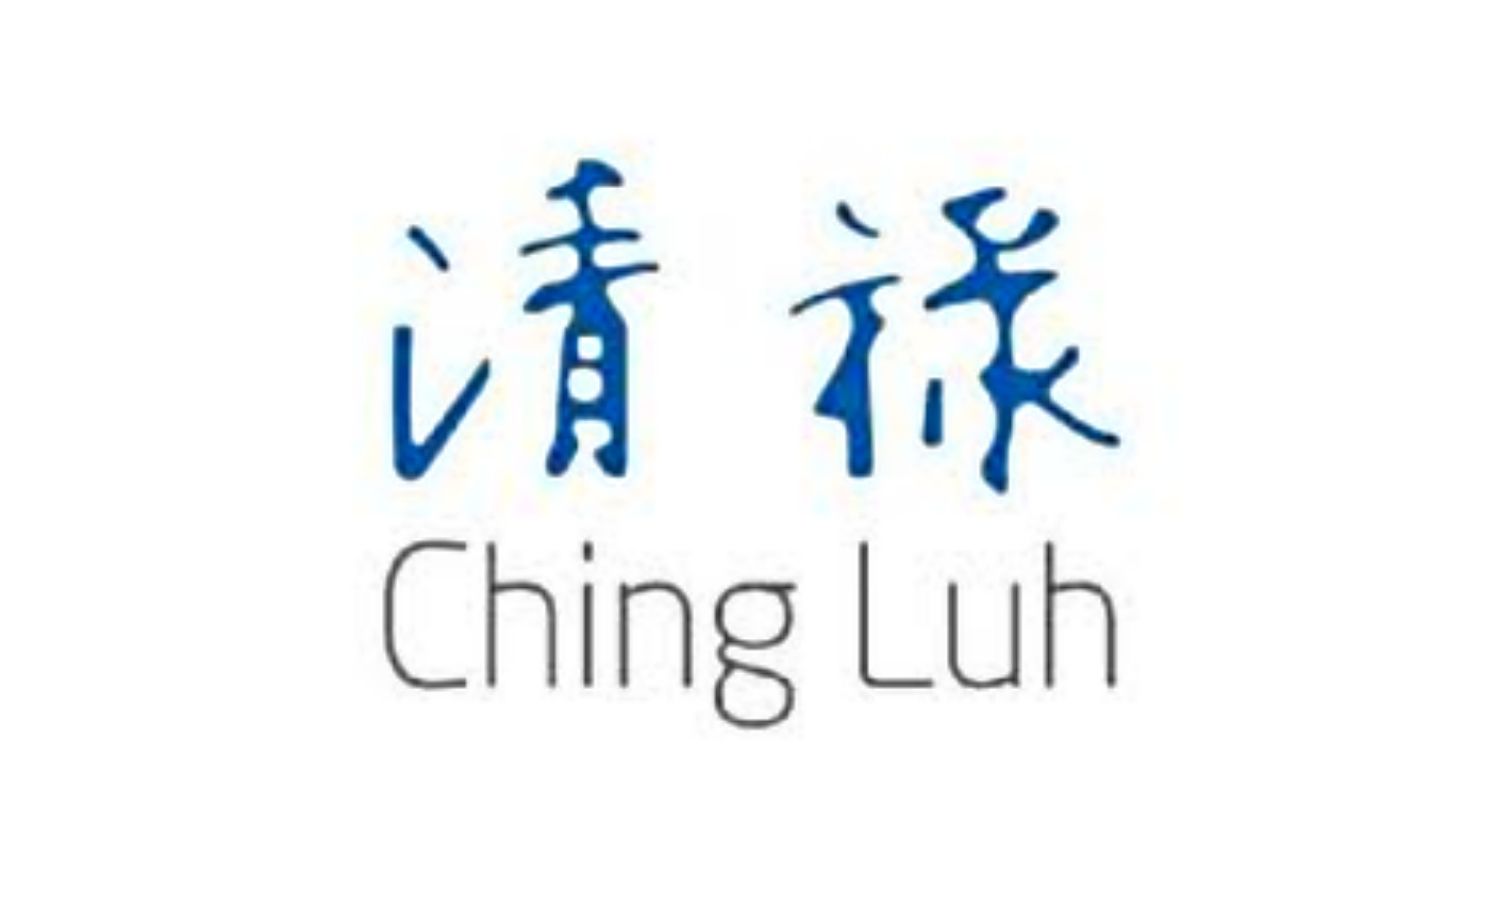 Ching-Luh